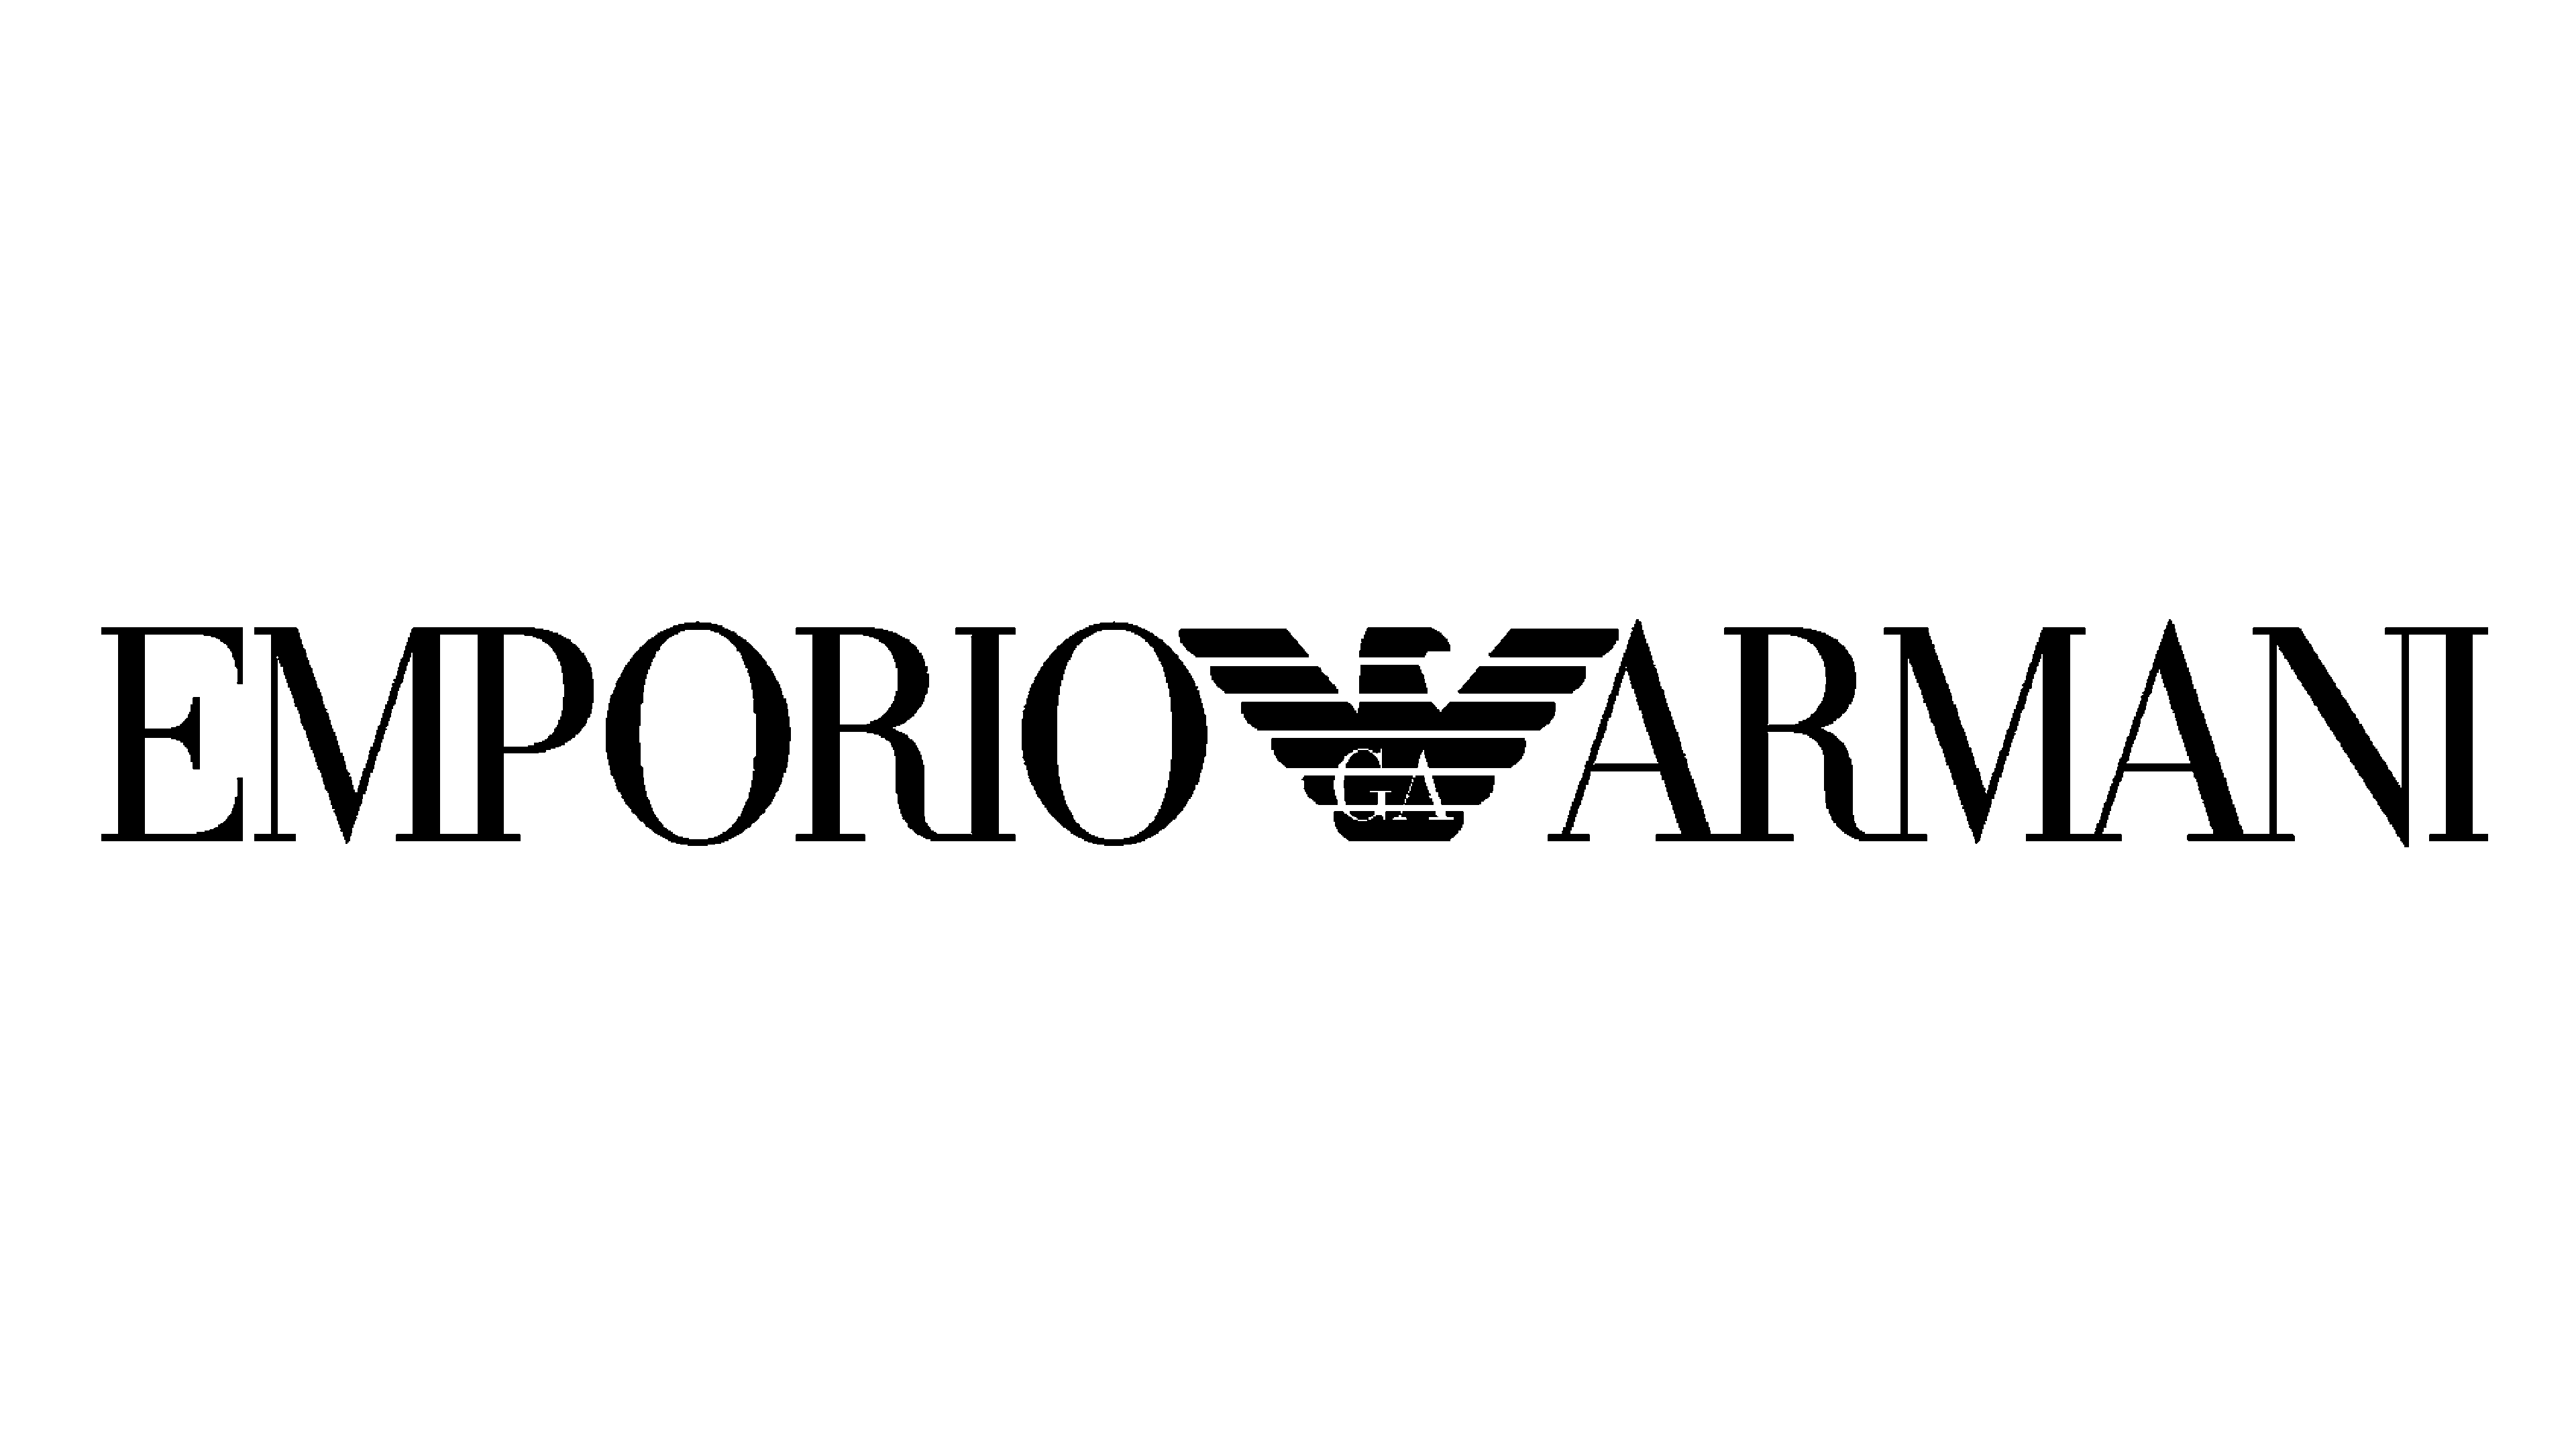 Emporio-Armani store Surrey Bc